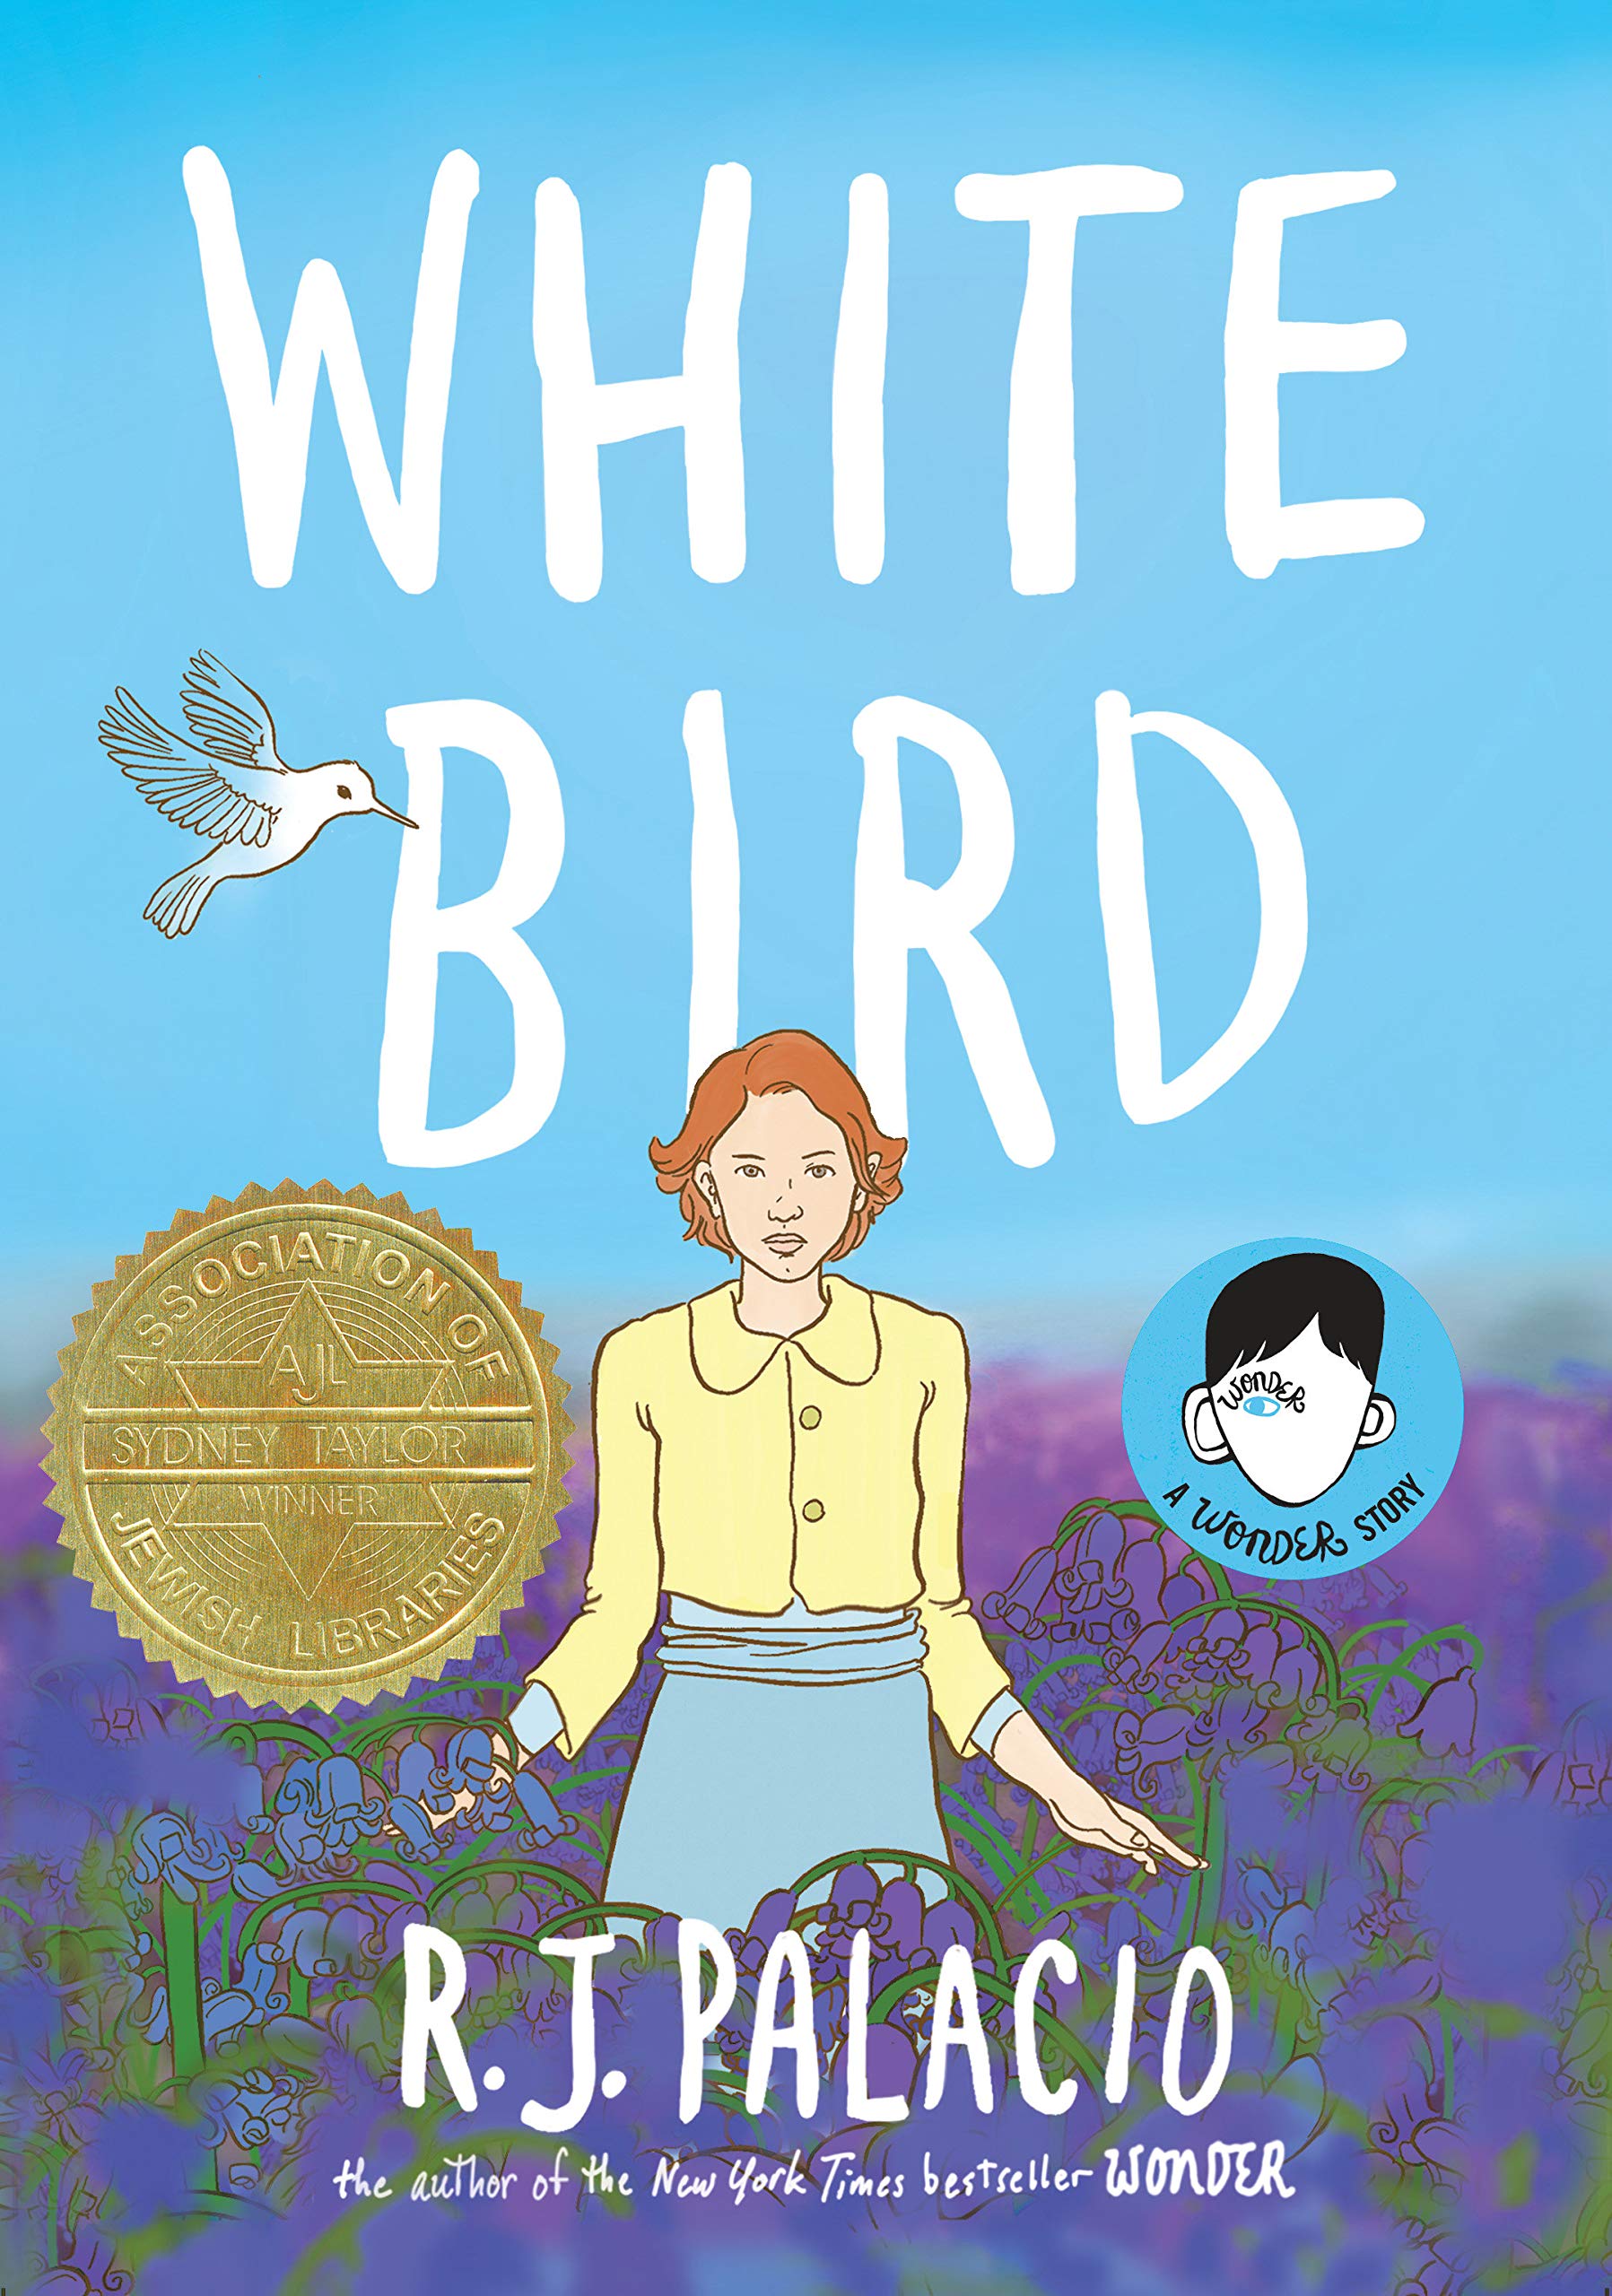 Image for "White Bird"